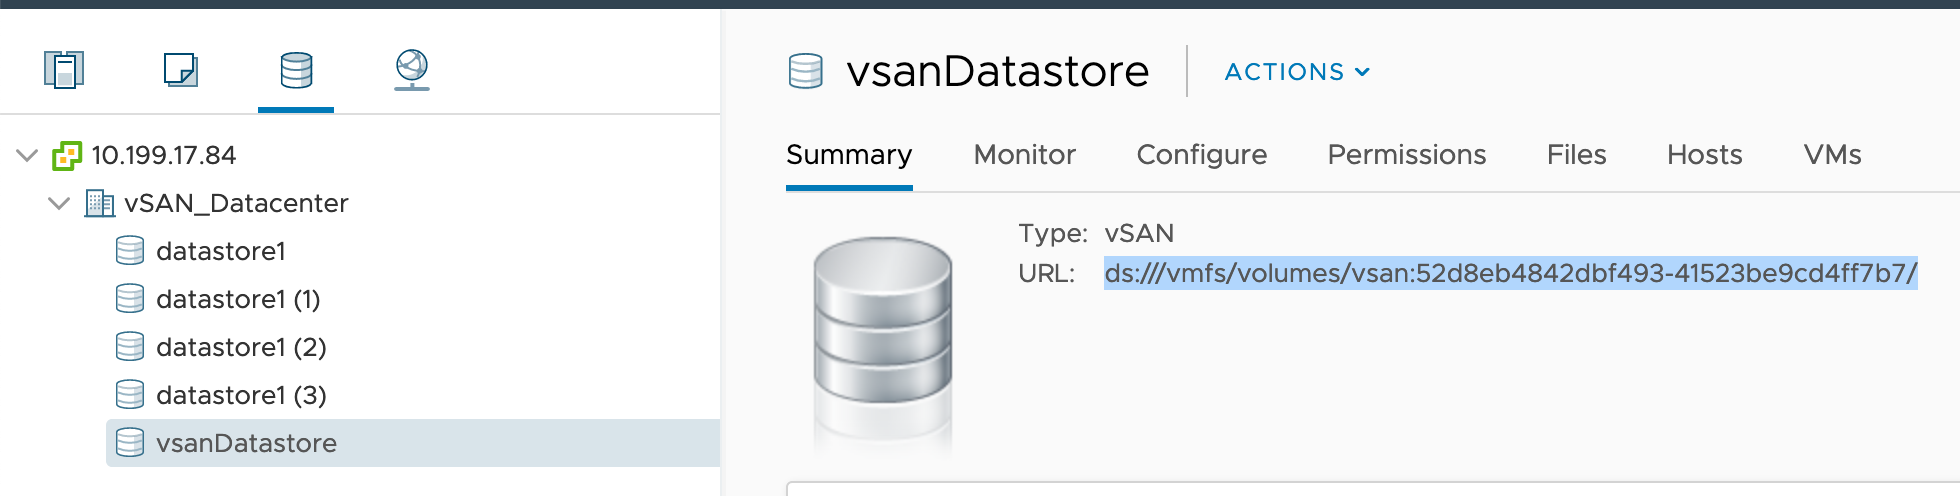 vSAN Datastore Summary pane in vCenter